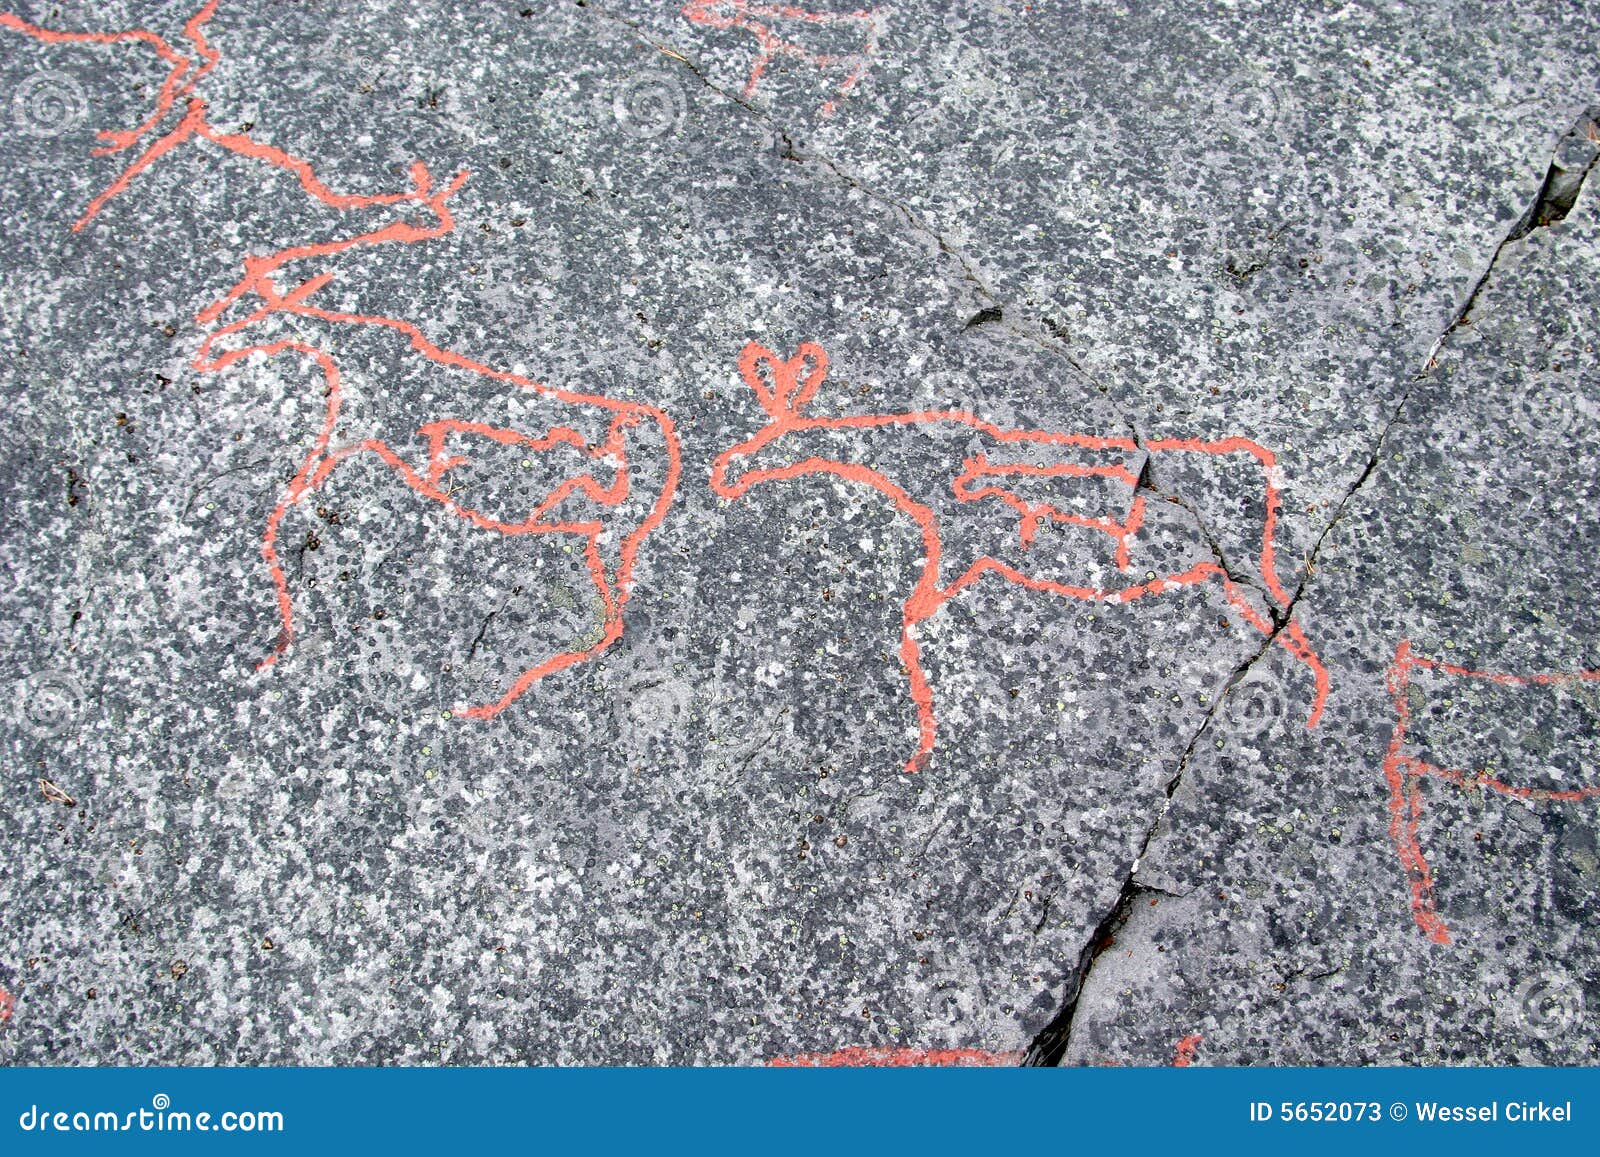 petroglyphs (pregnant reindeer) at alta, norway